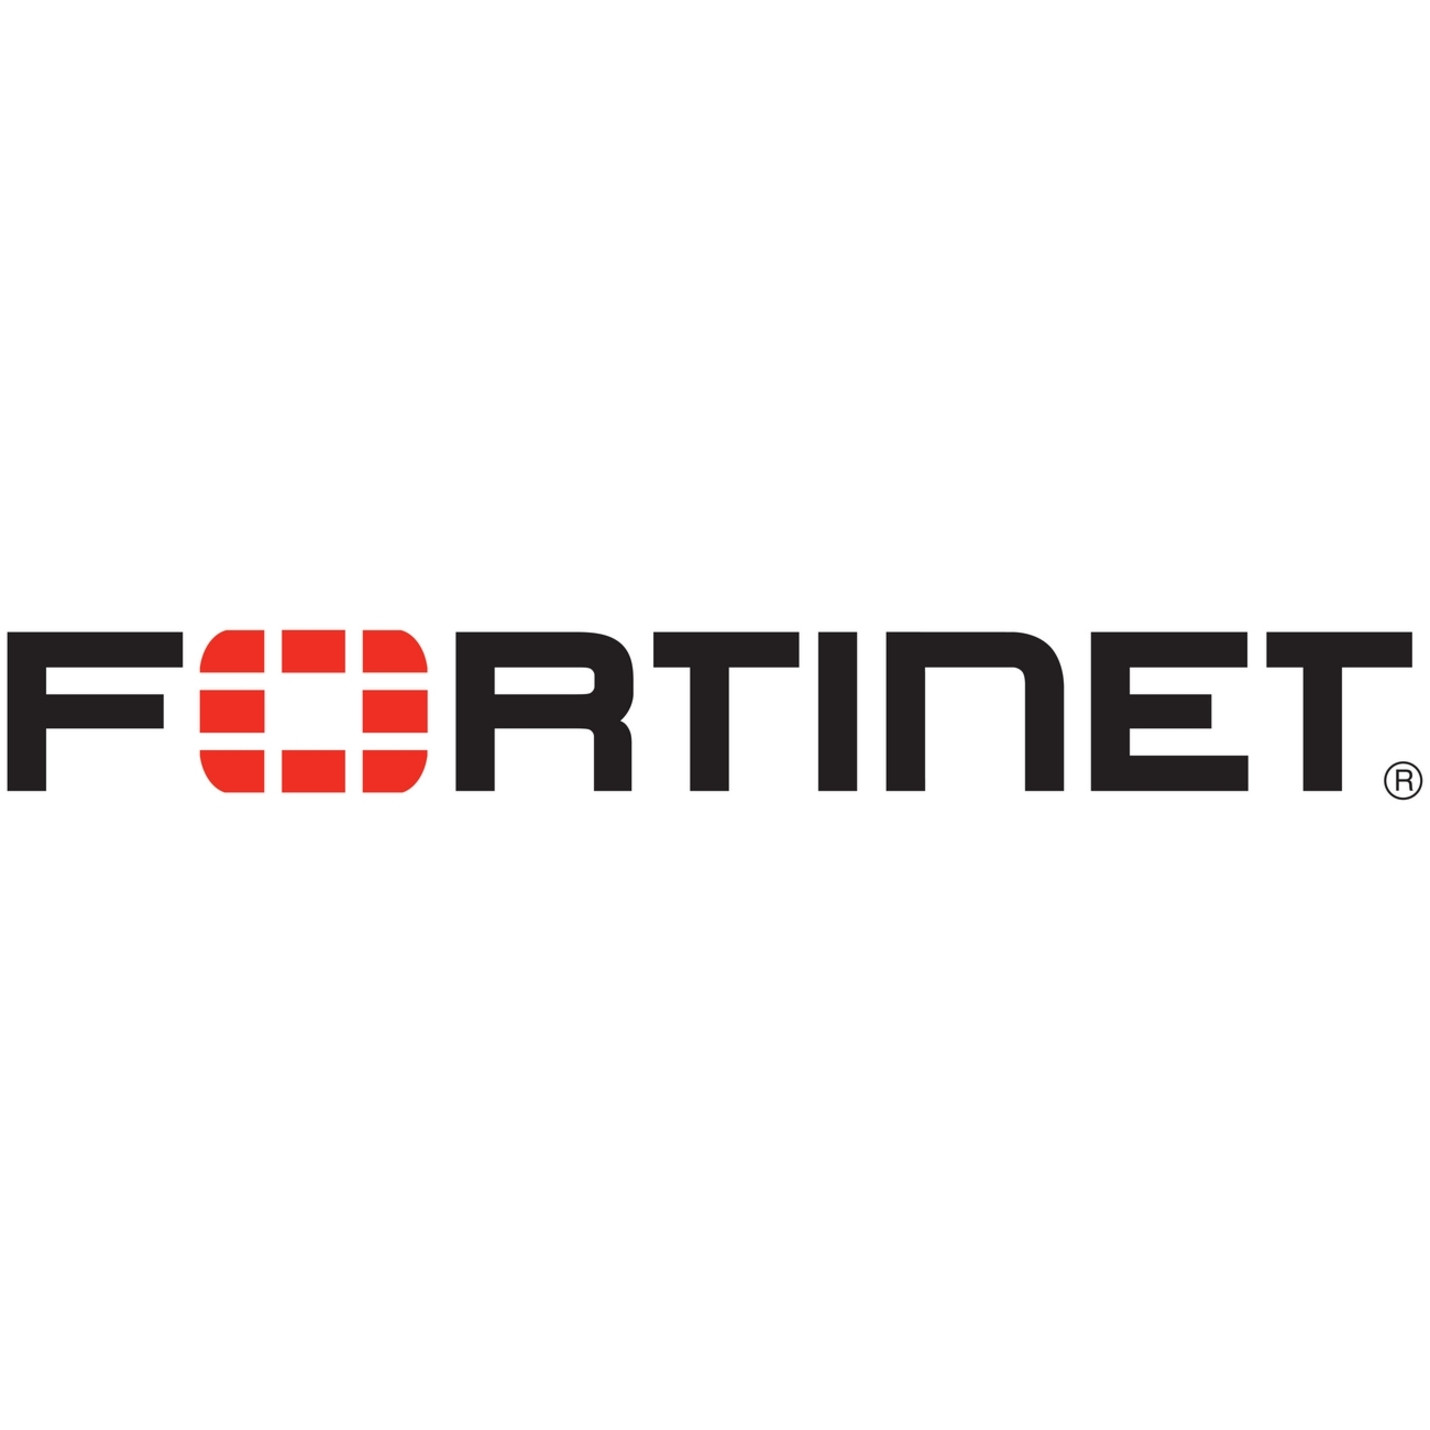 Fortinet Enterprise Bundle (FortiCare plus NGFW, AV, Web Filtering, Antispam, Botnet IP/Domain, FortiSandbox Cloud and Mobile Secu… FC-10-0091E-974-0…